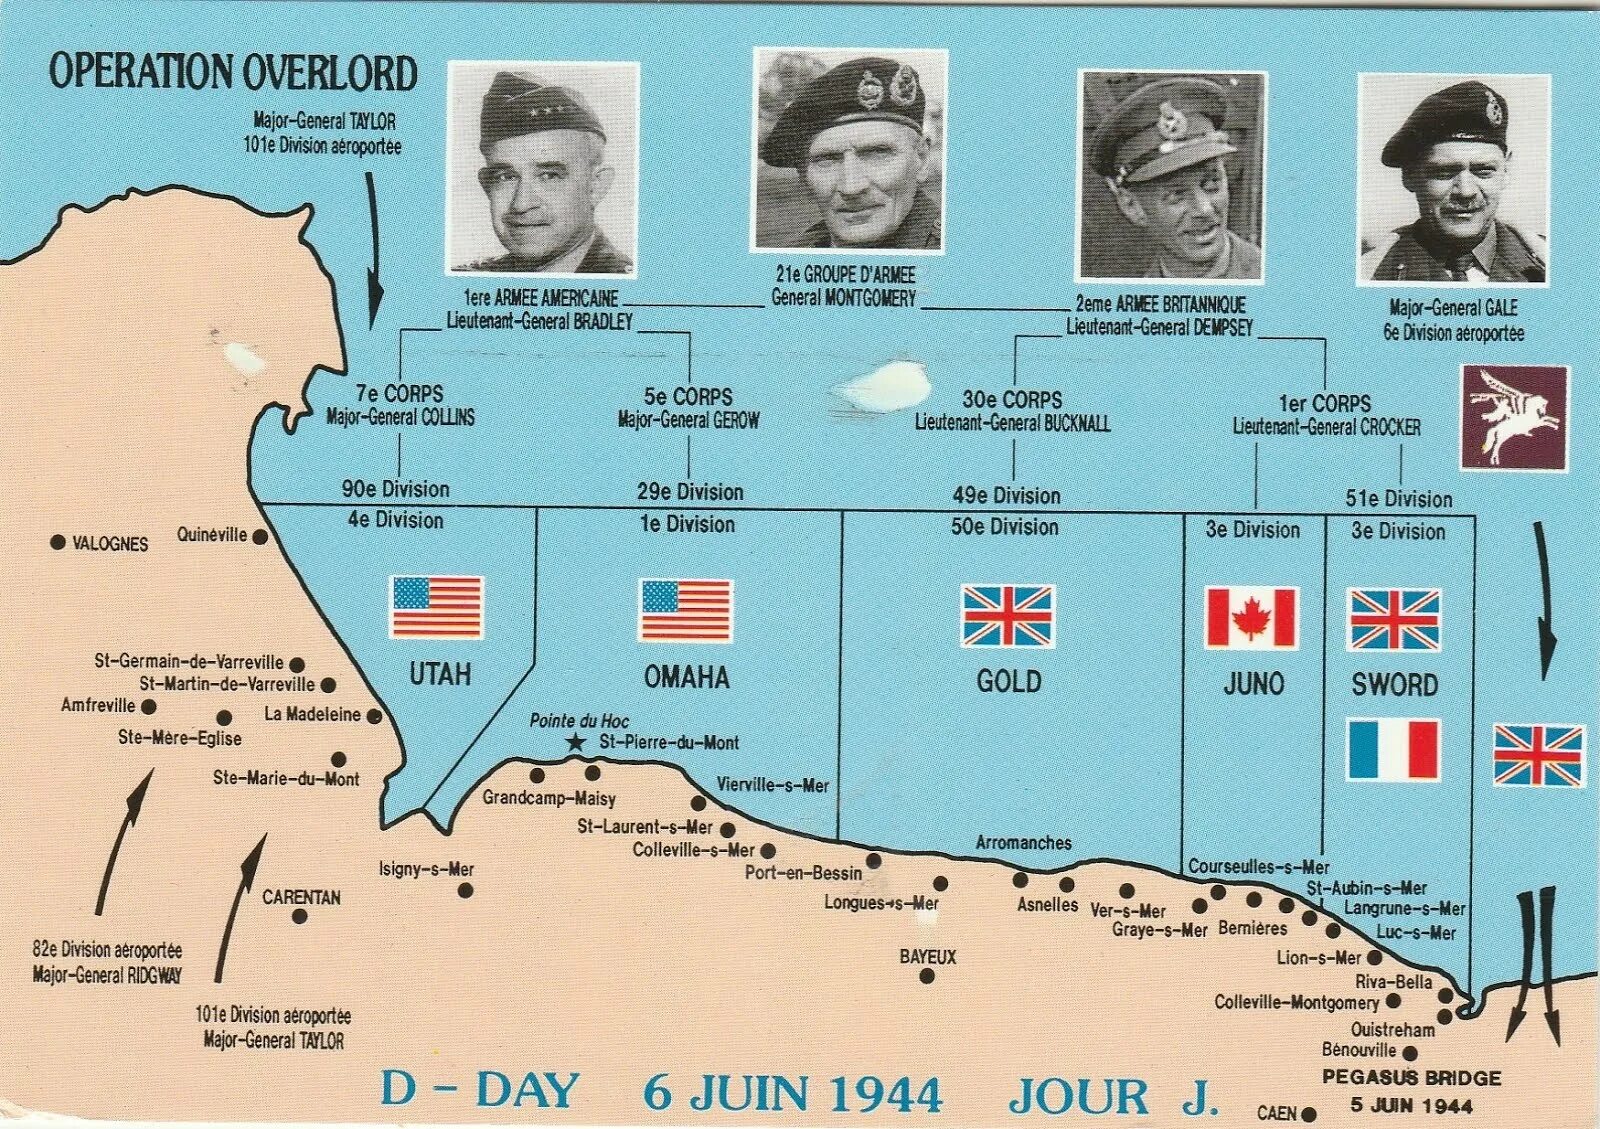 Операция в Нормандии 1944 карта. Высадка в Нормандии 1944 план. Операция Оверлорд карта. Нормандская операция Оверлорд карта. Операция 6 июня 1944